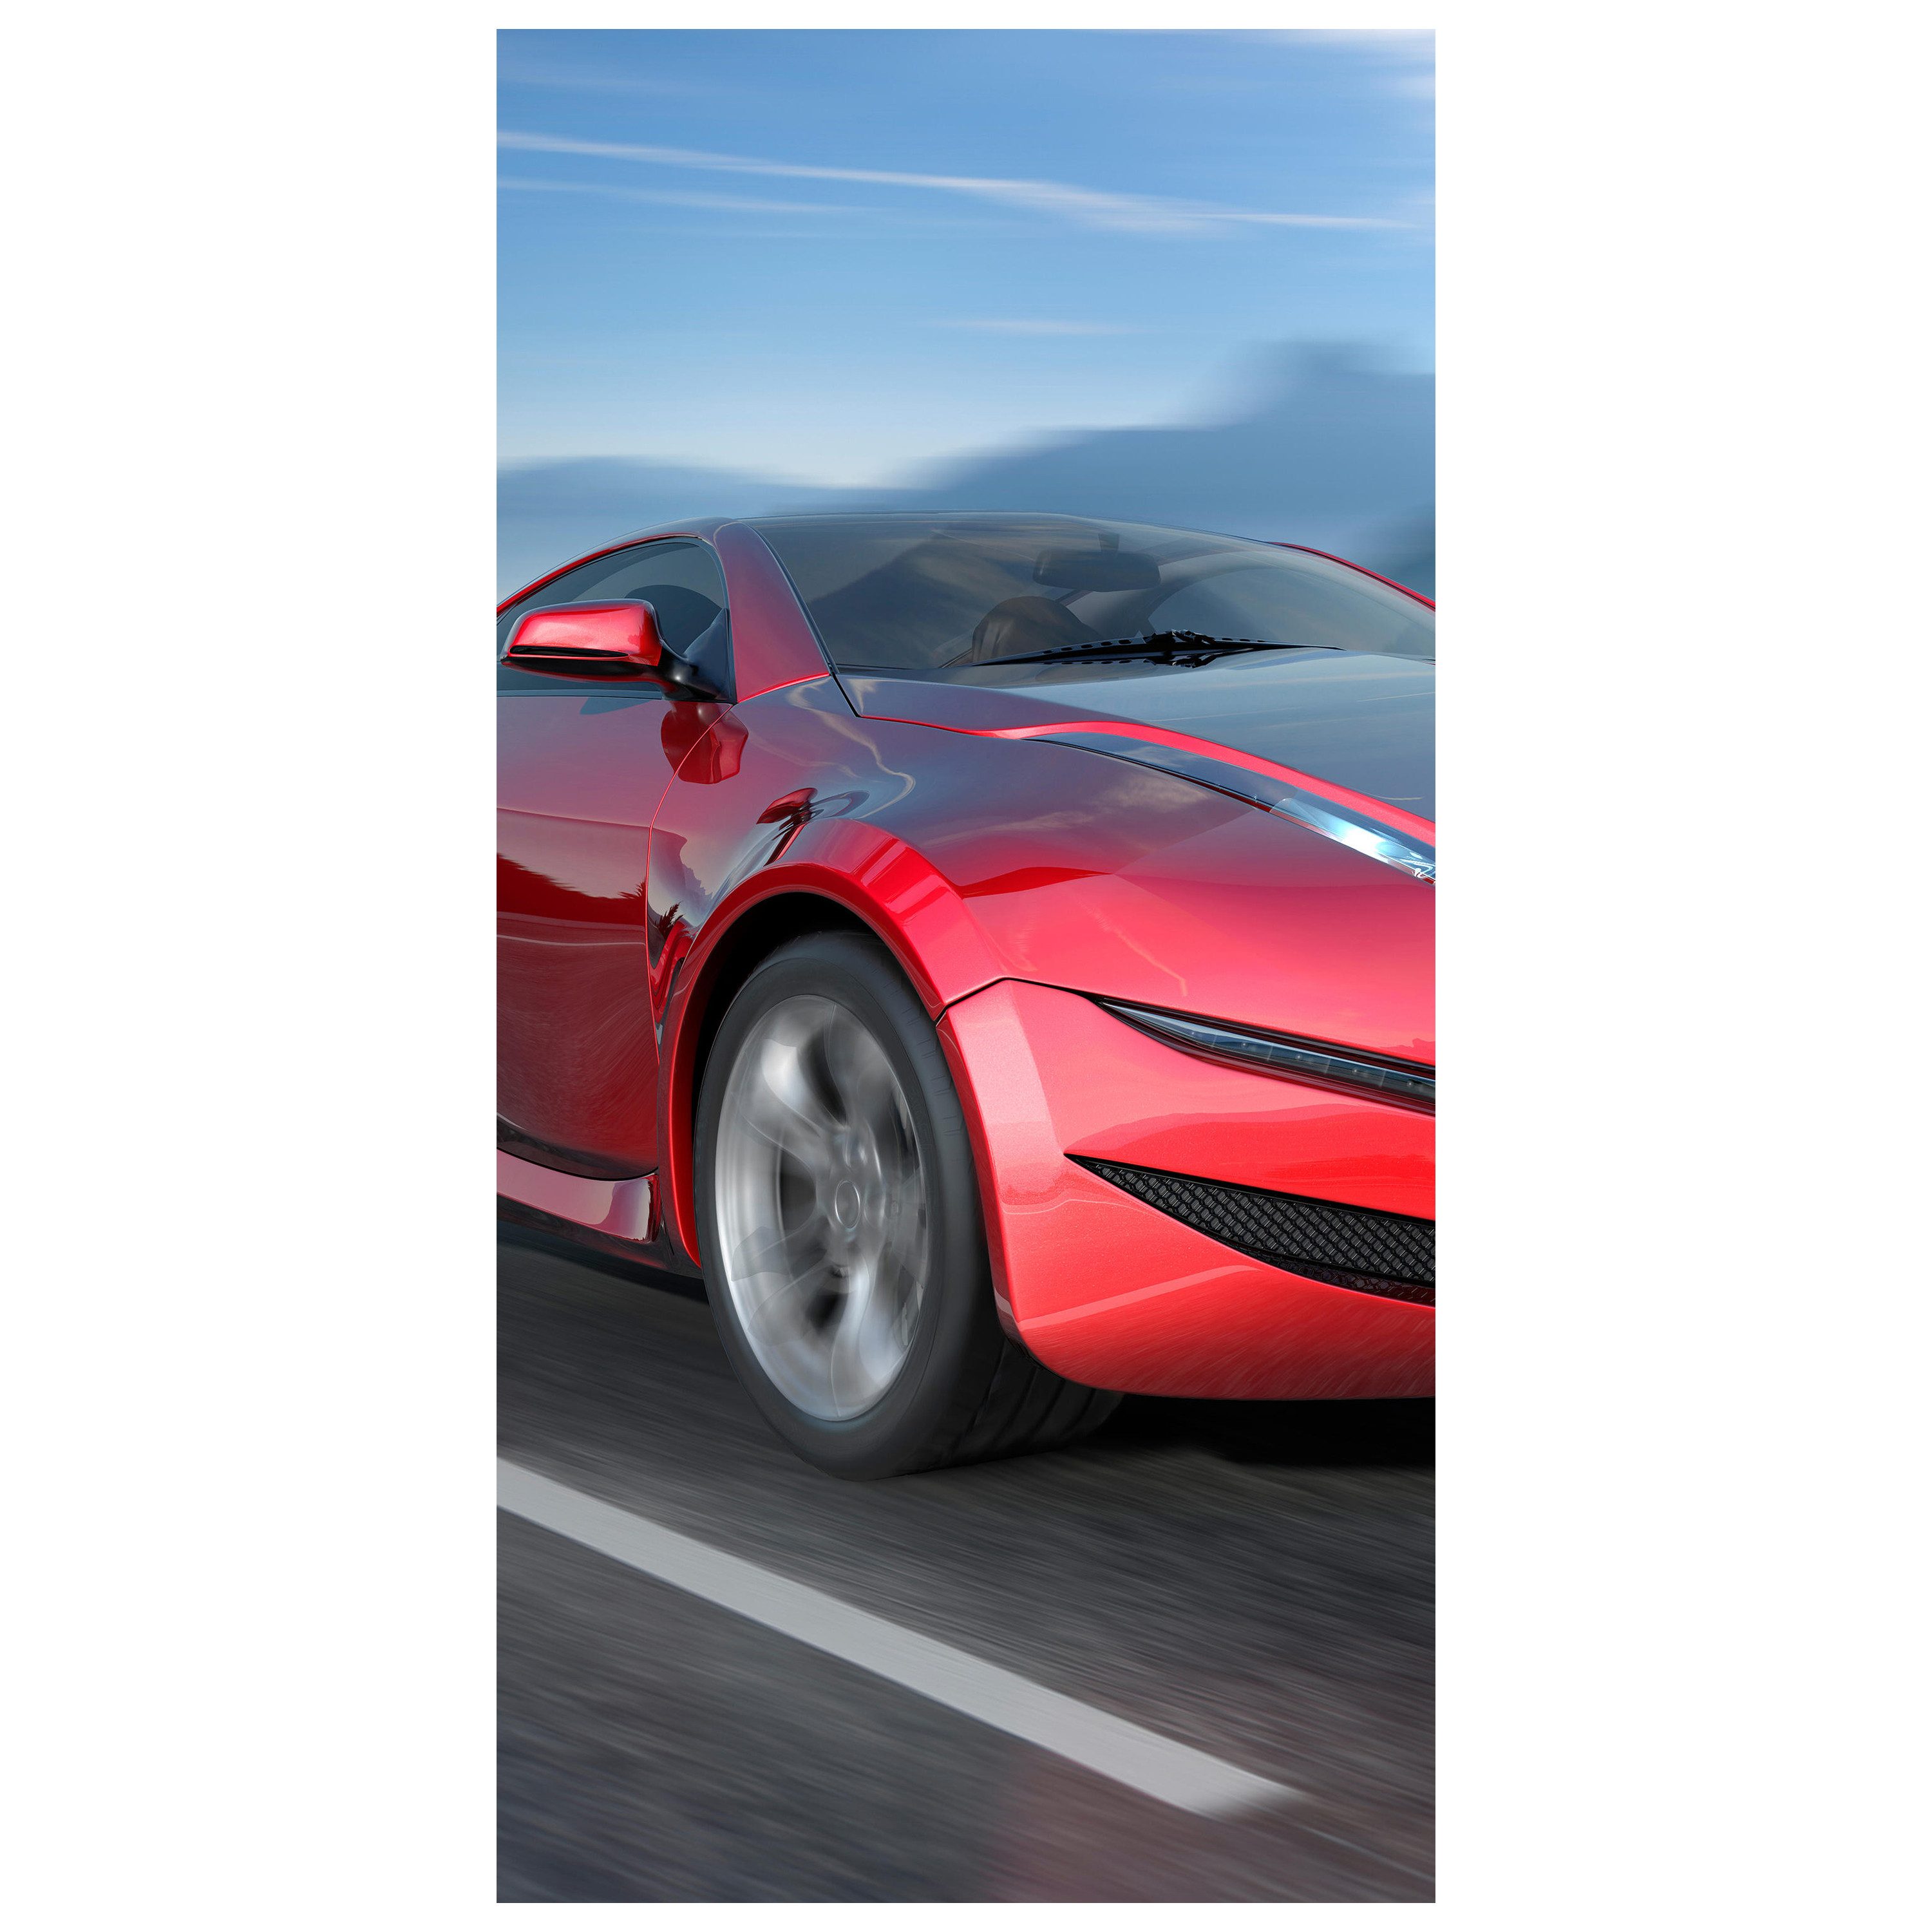 wandmotiv24 Türtapete Fahrender Sportwagen, glatt, Fototapete, Wandtapete, Motivtapete, matt, selbstklebende Dekorfolie